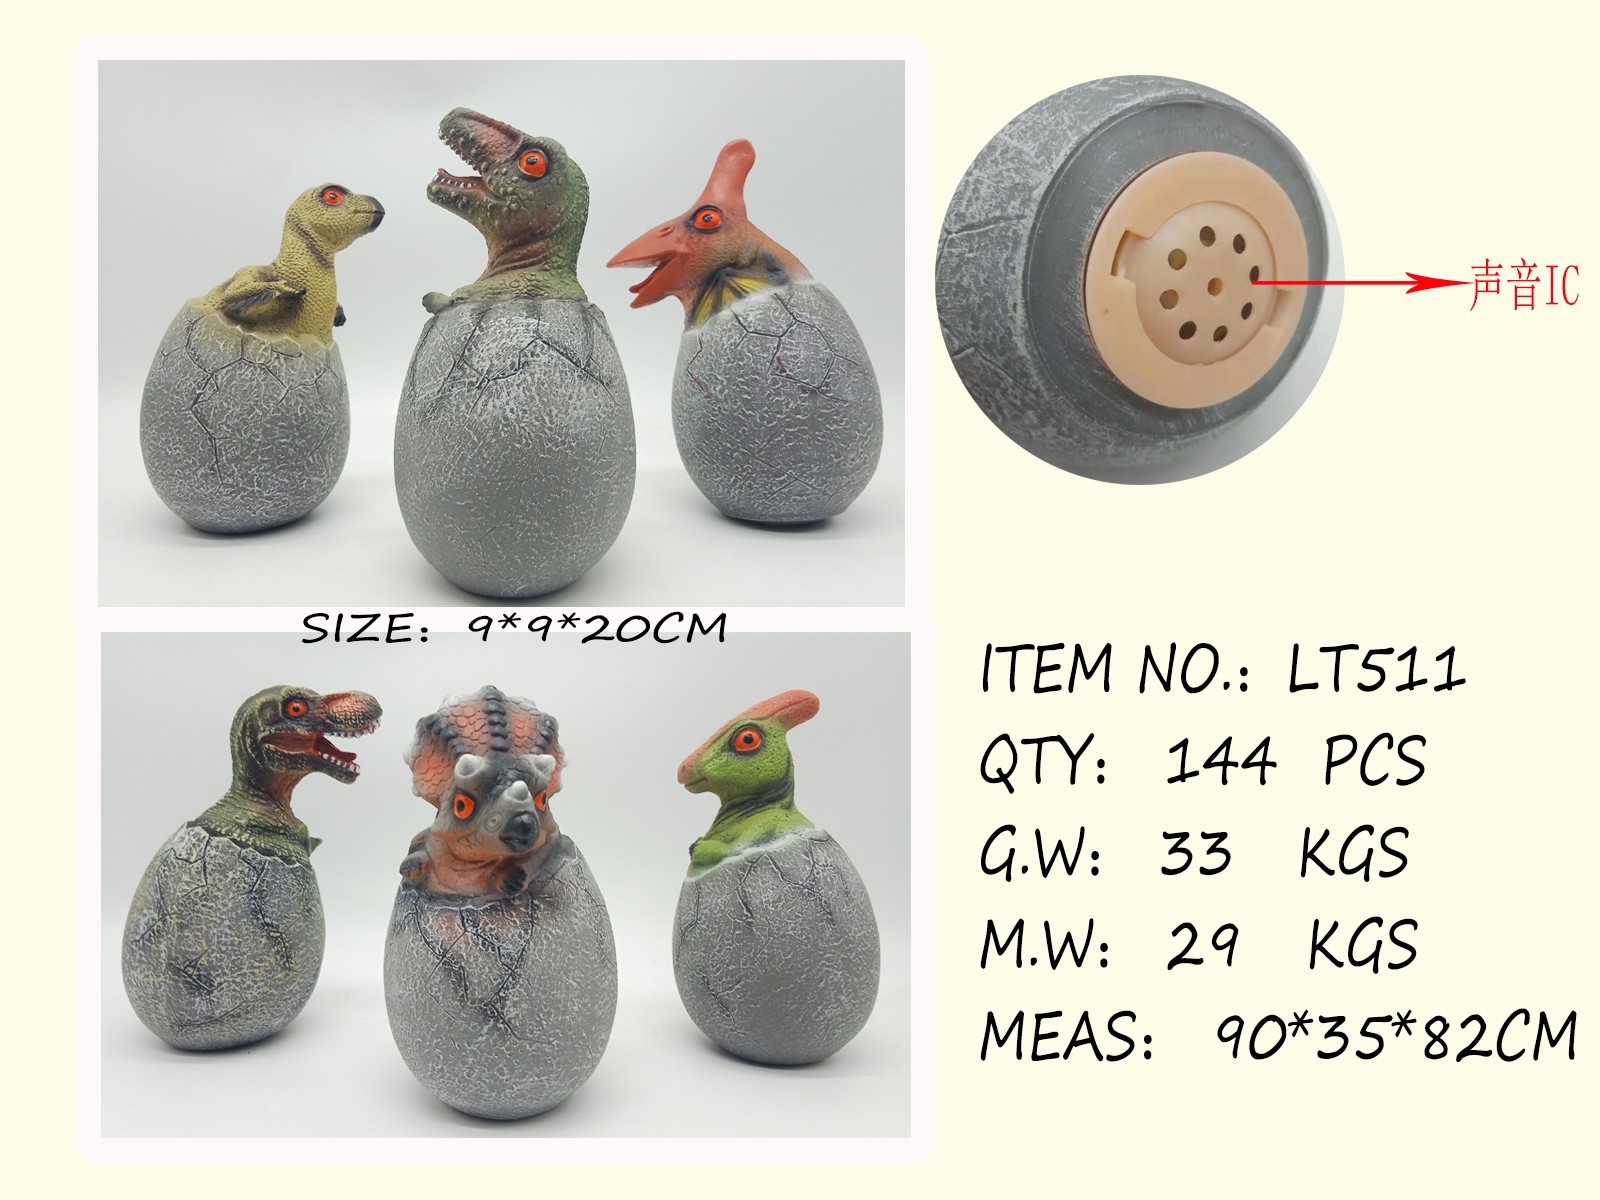 LT511Wholesale Soft Vinyl PVC Animals Toy Cotton Stuffing Model Educational Toys